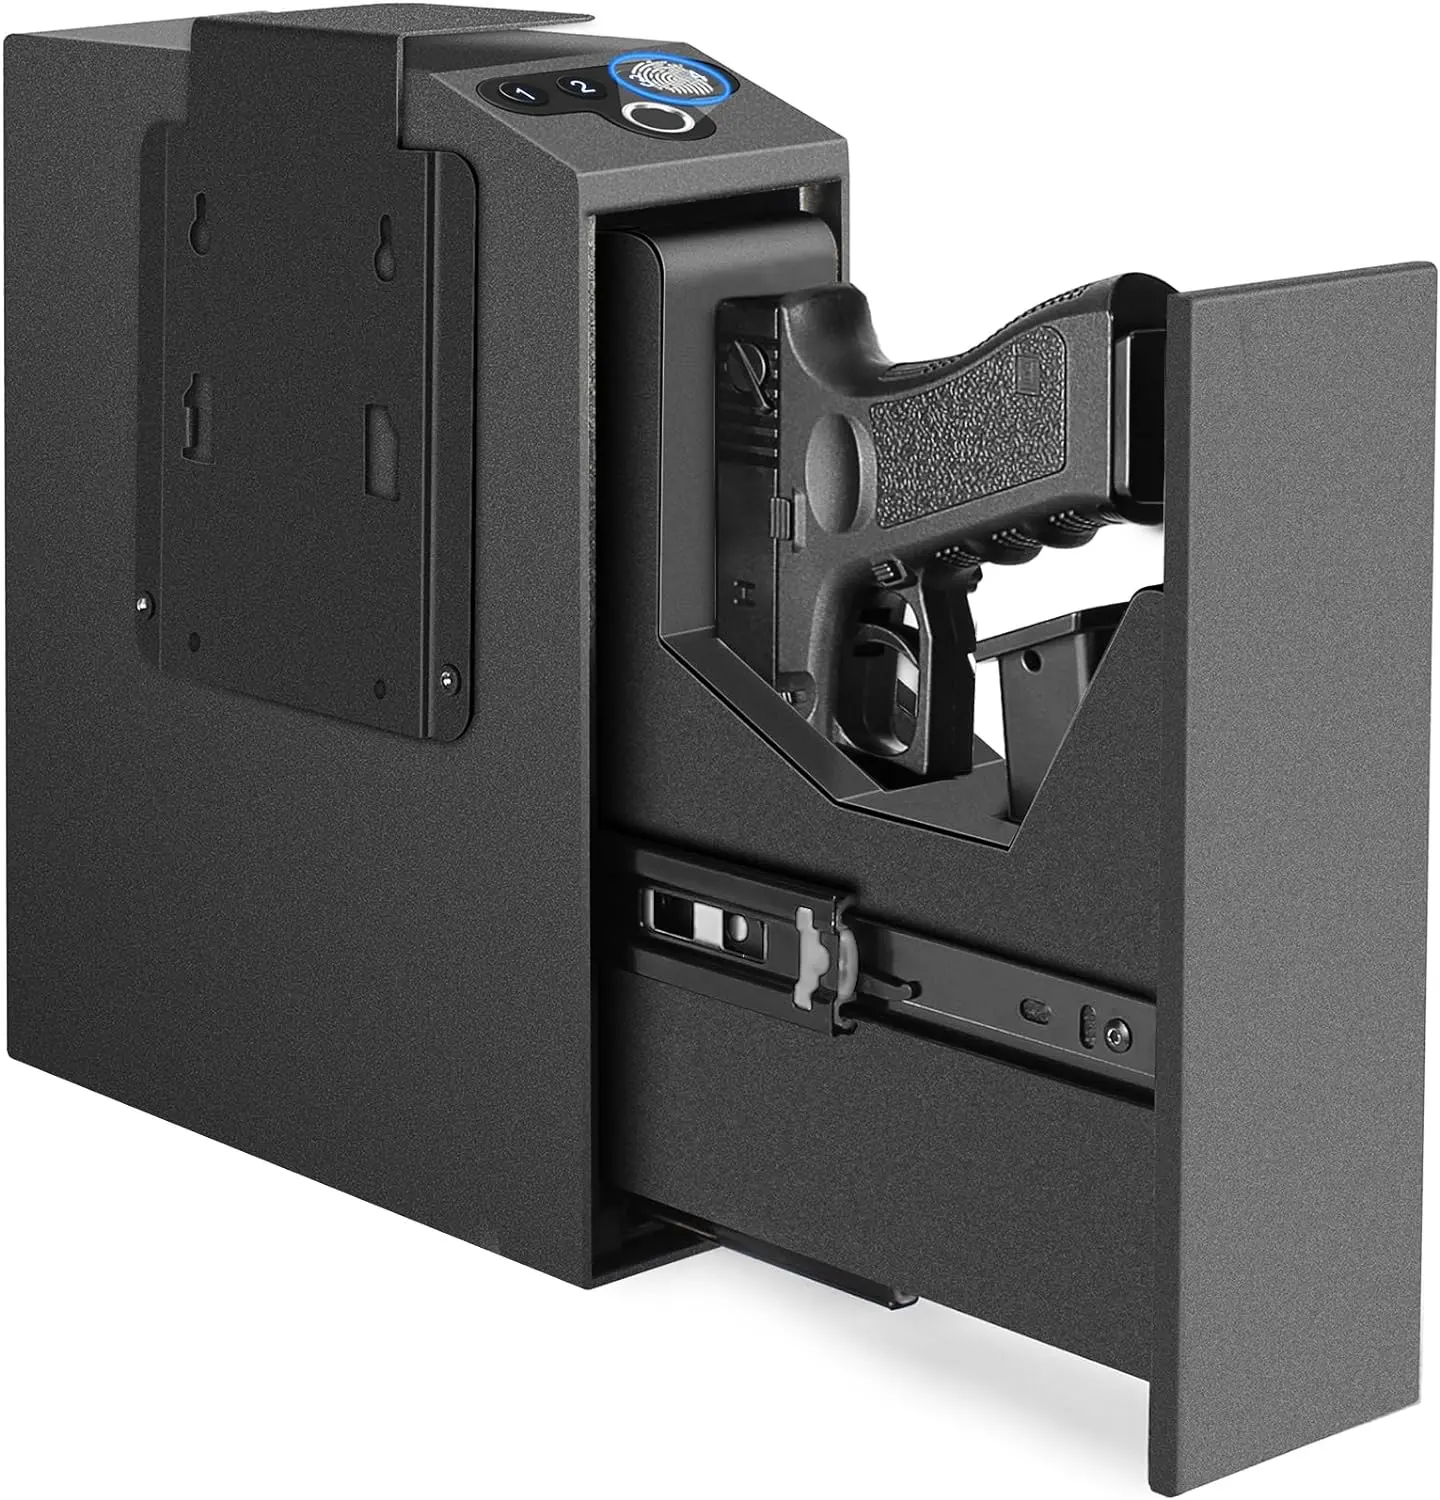 Automatic Pulling And Hanging Gun Box, Hidden Safes For Home Biometric Fingerprint, Hand Gun Auto-open Steel Storage Safe Box